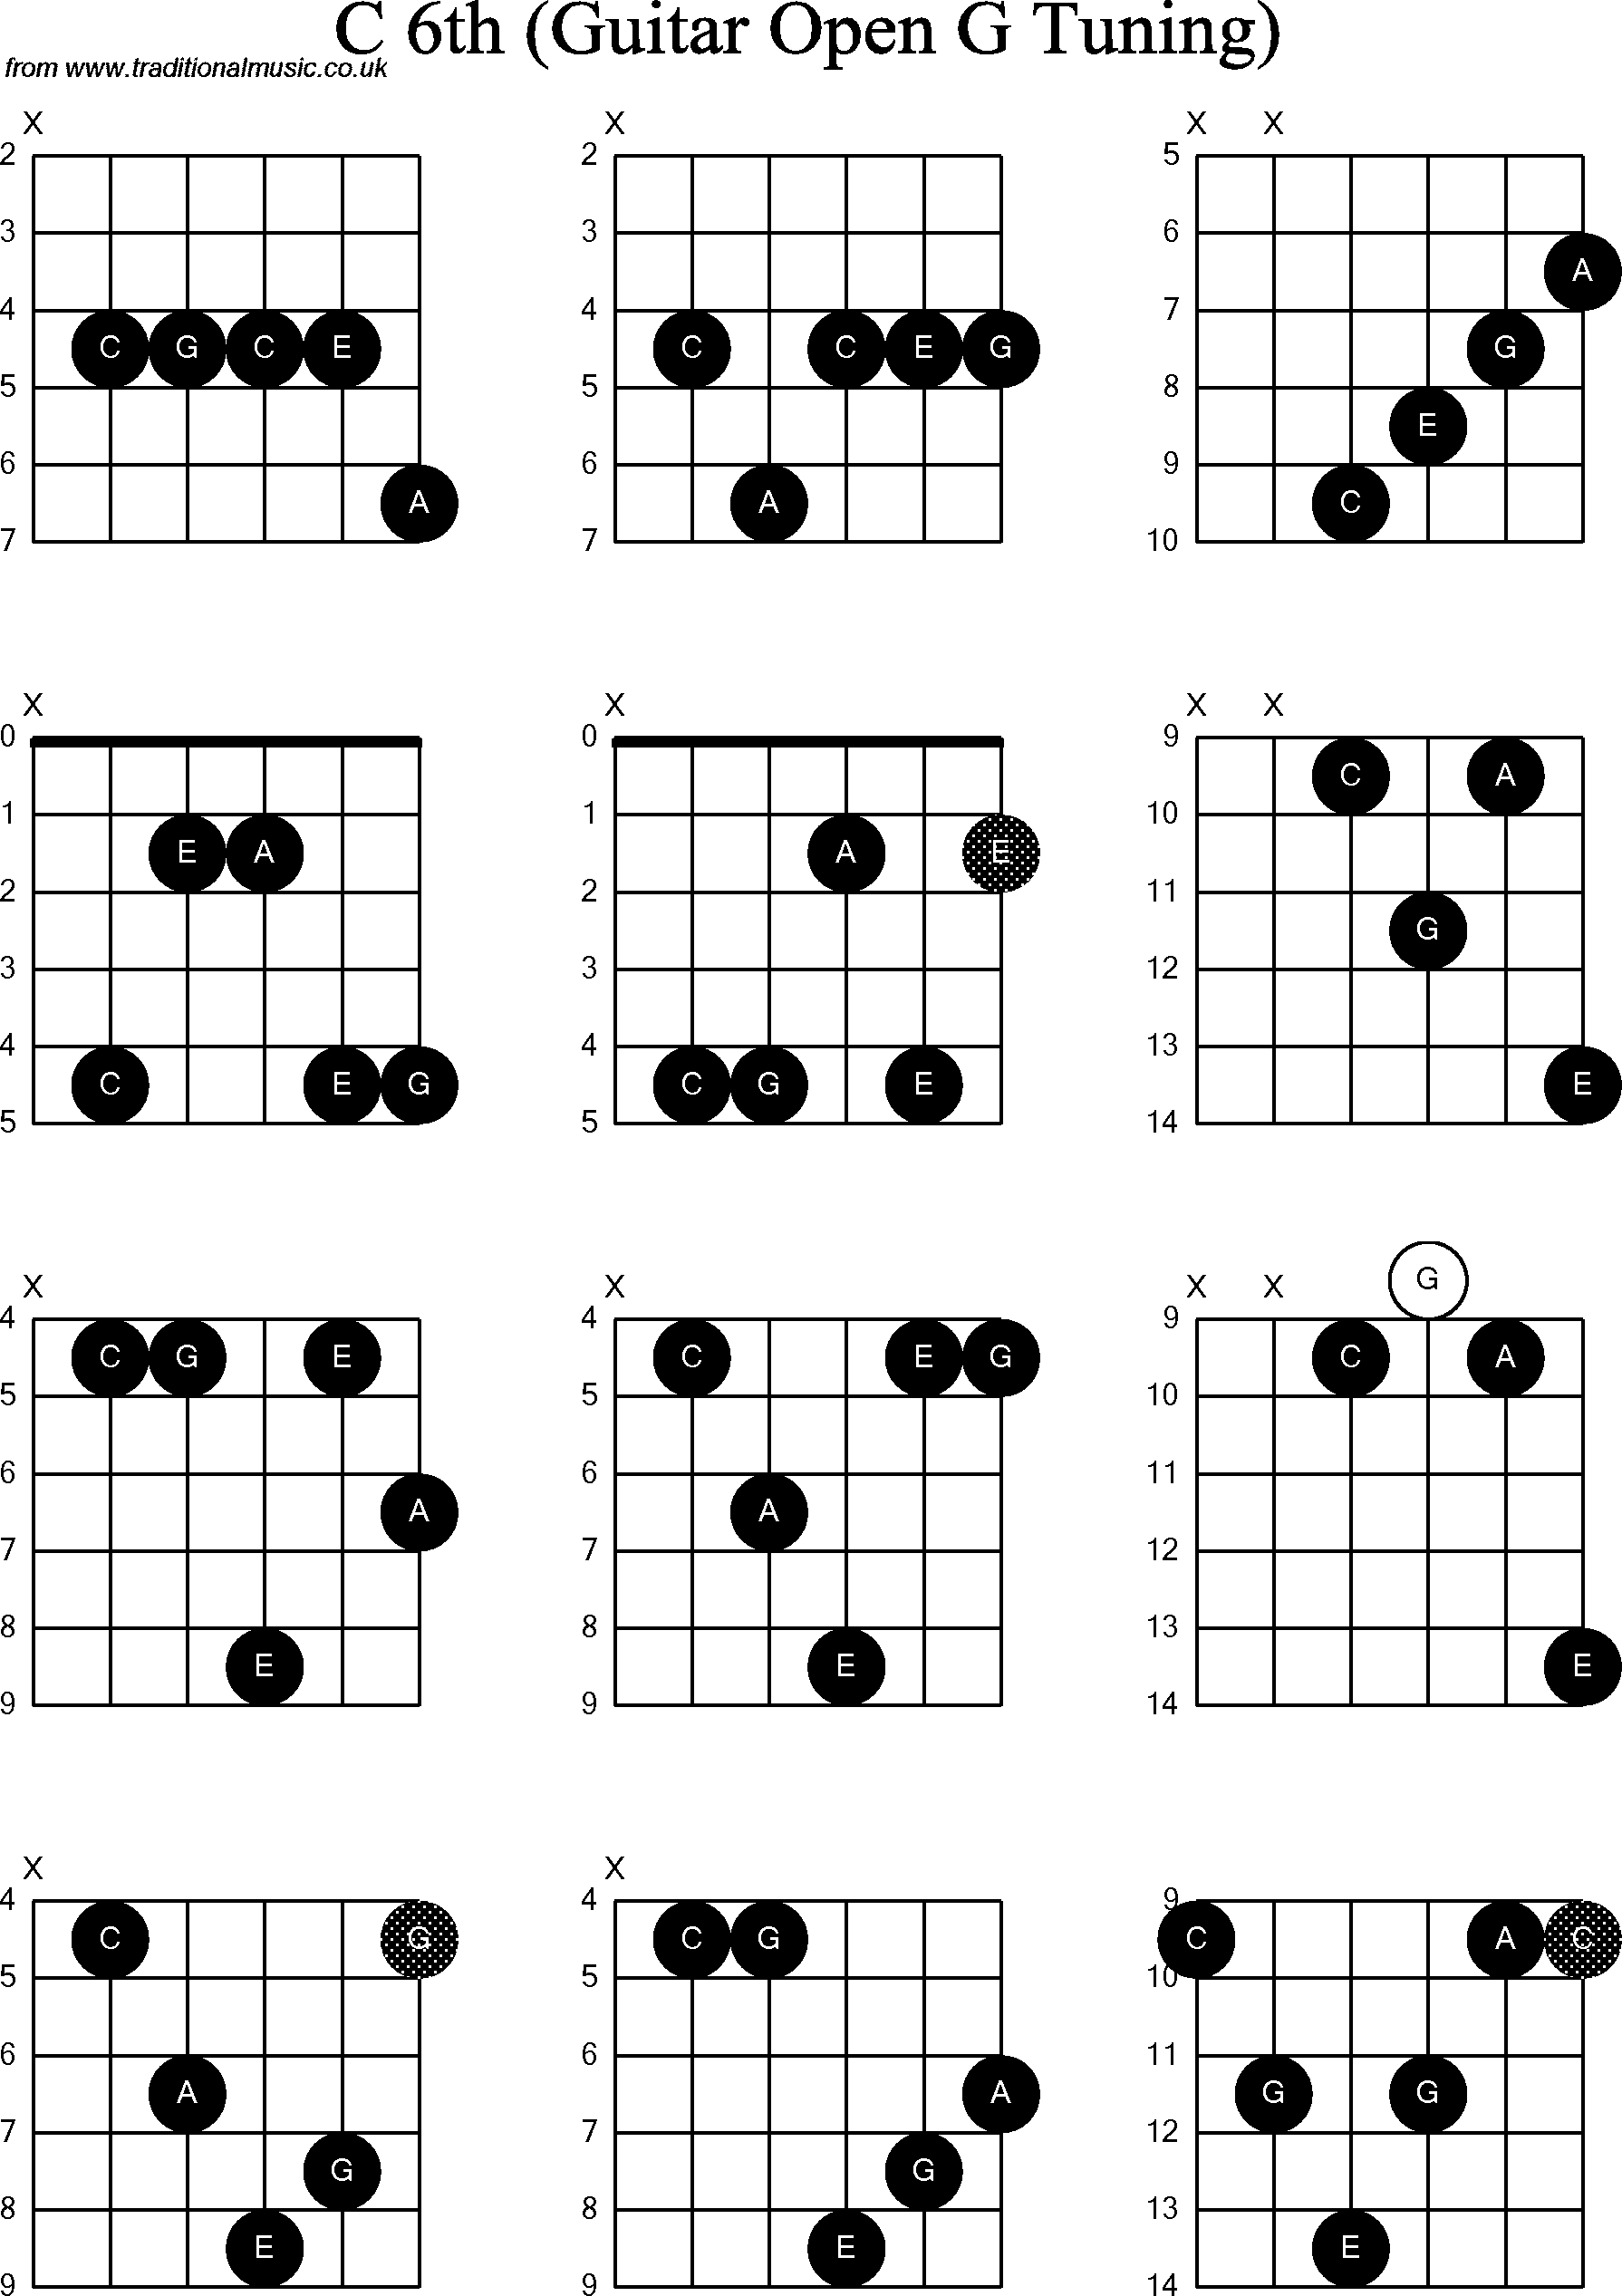 Chord diagrams for Dobro C6th